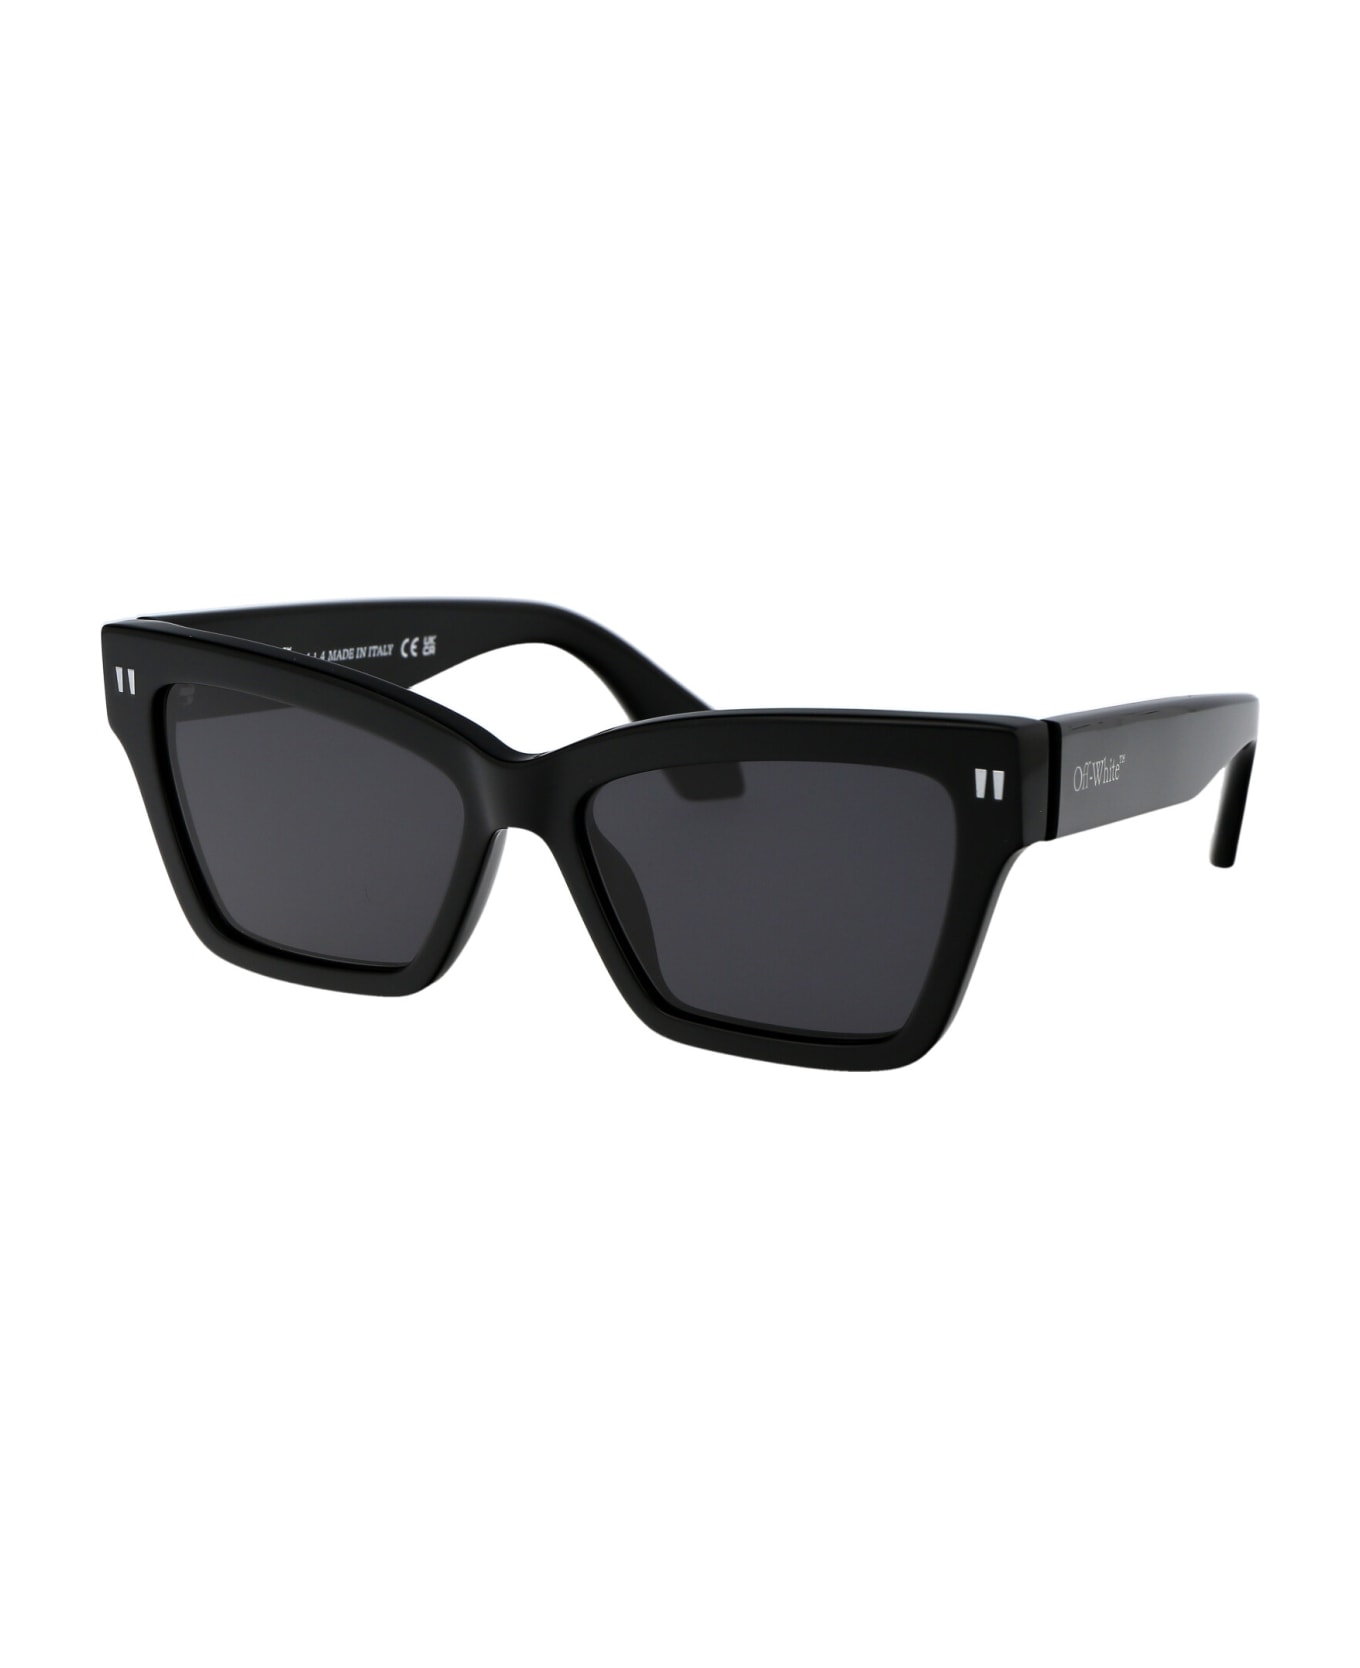 Off-White Cincinnati Sunglasses - 1007 BLACK